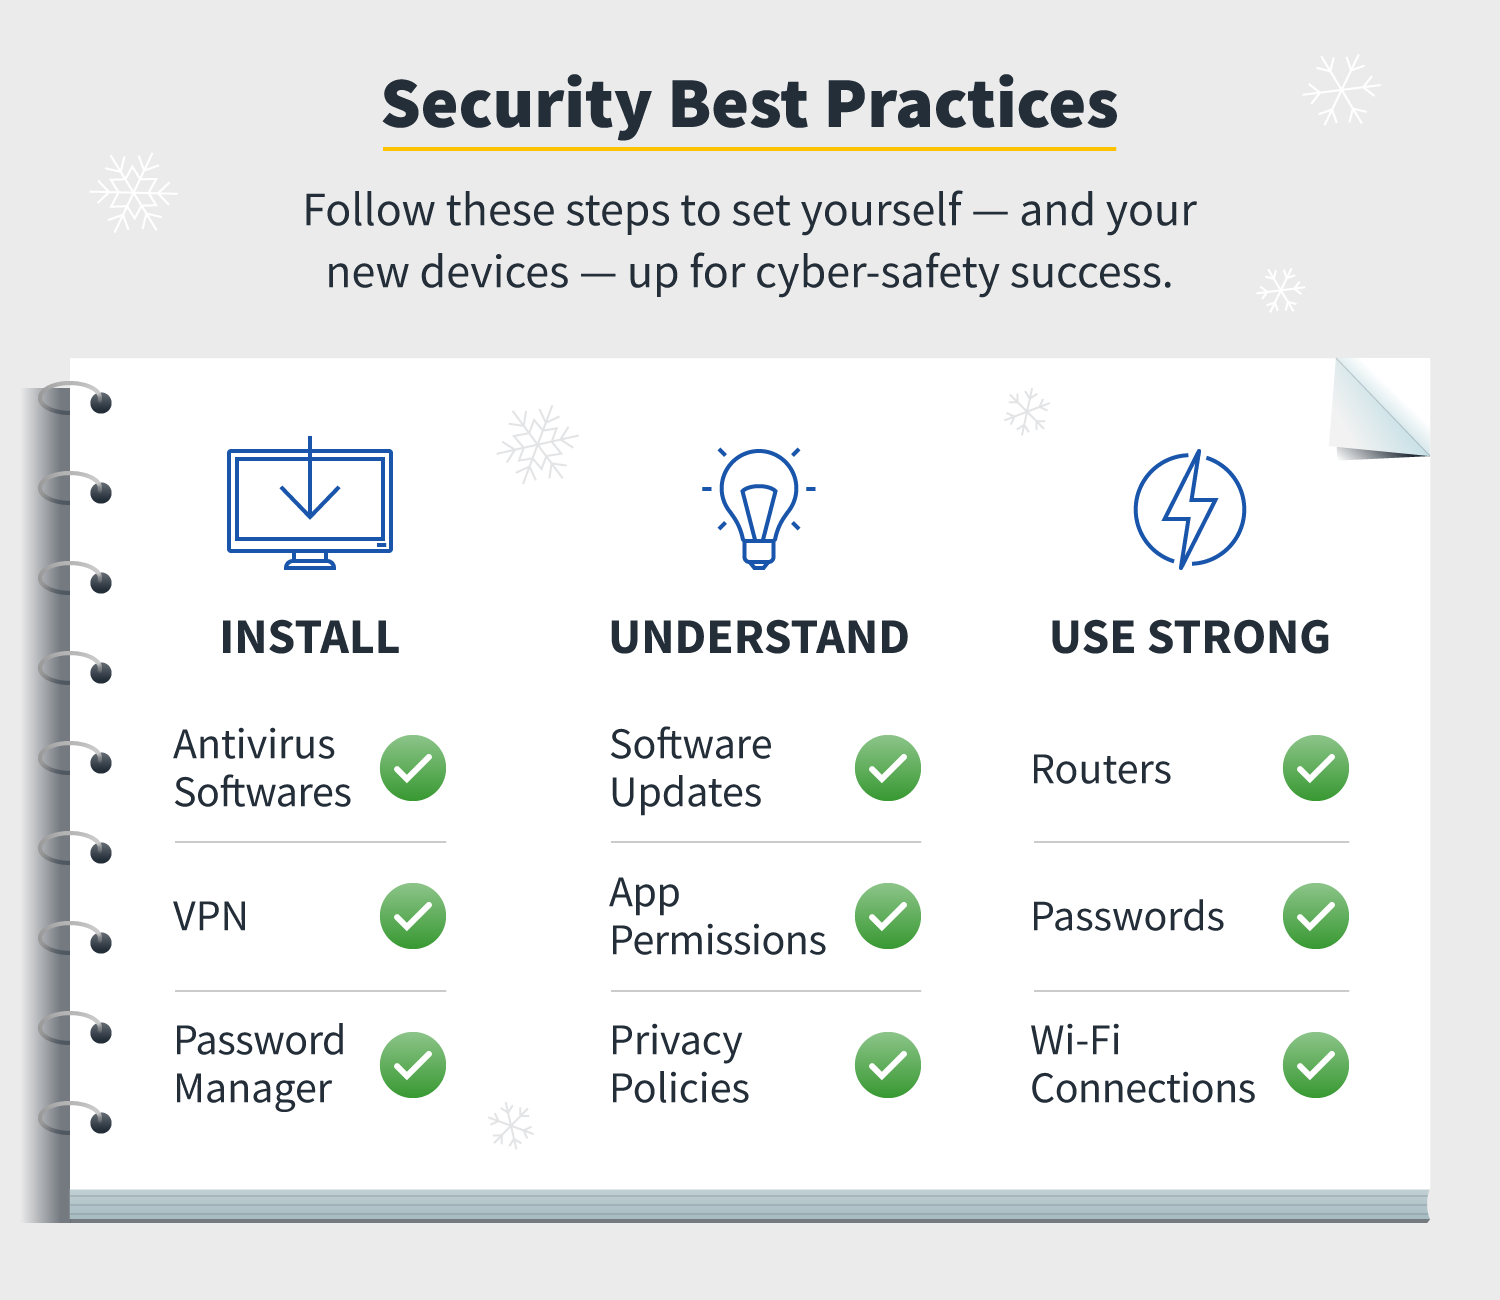 Security best practices